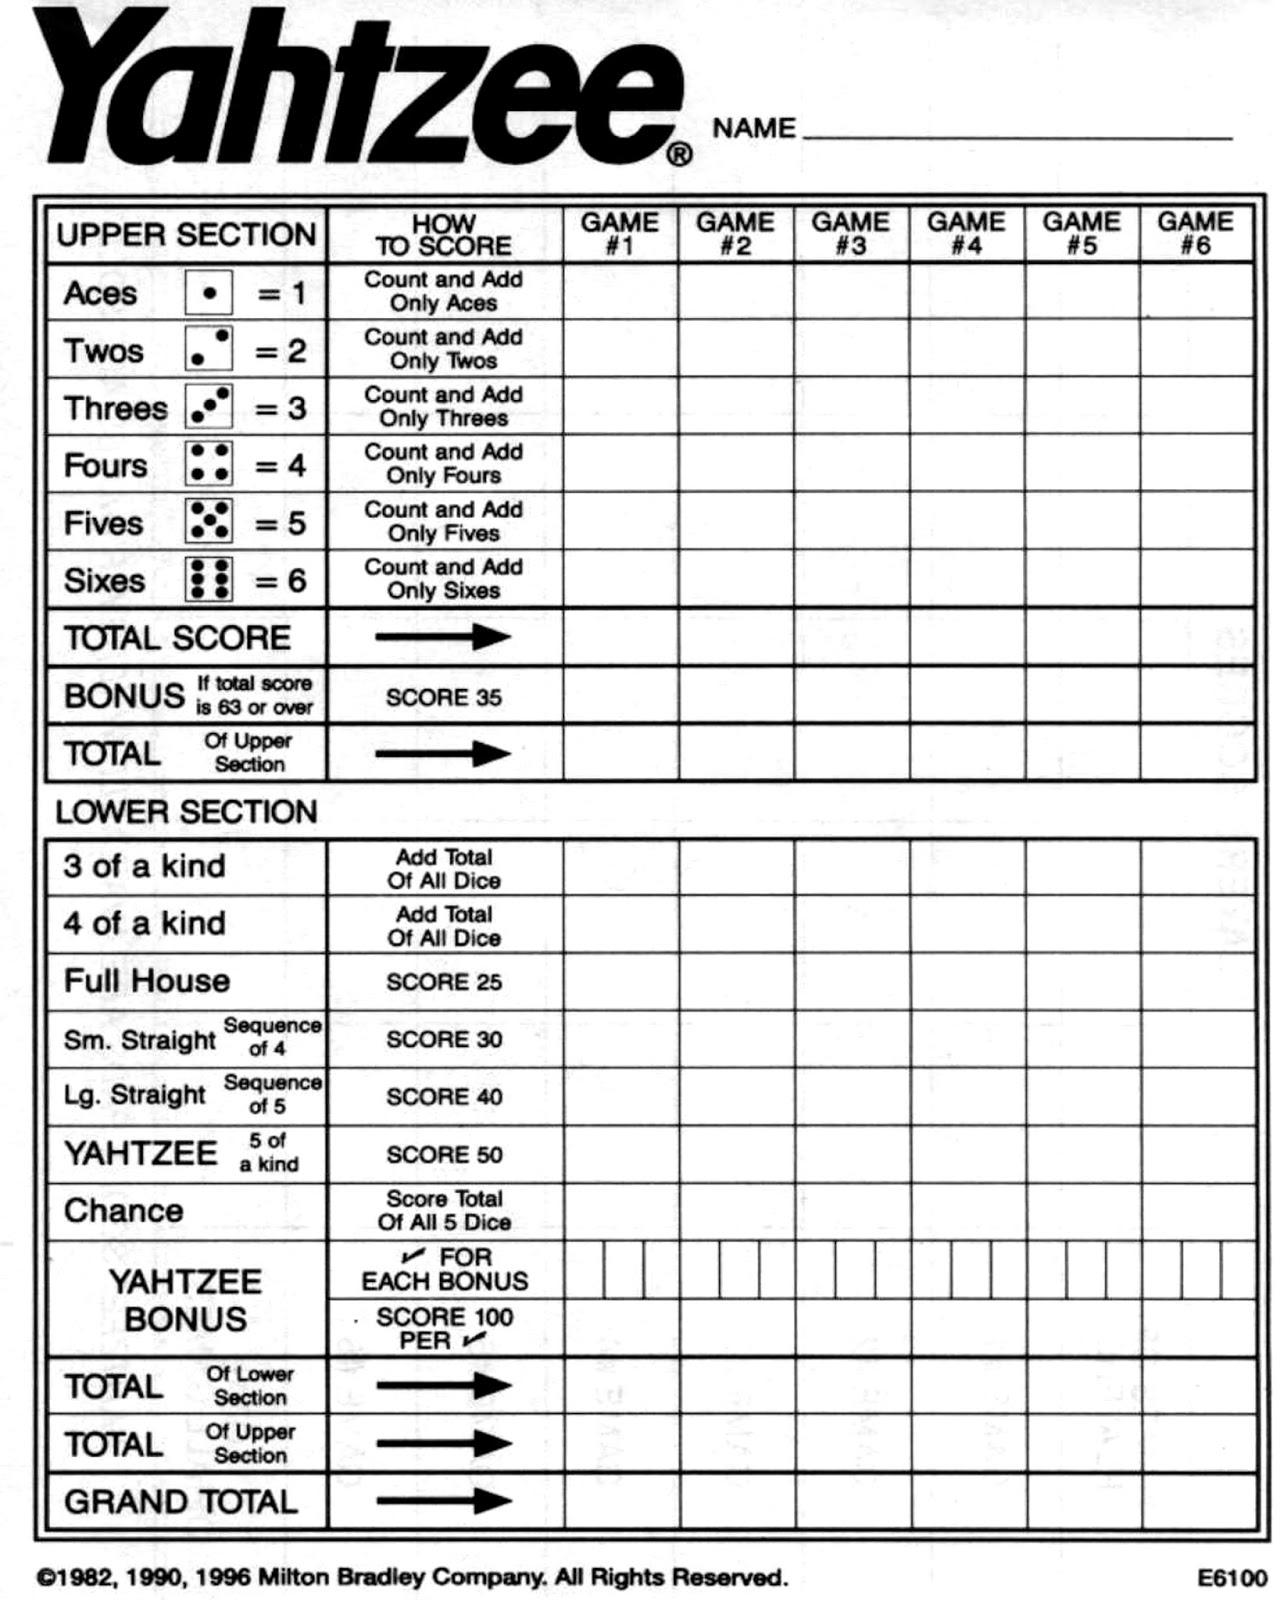 Yahtzee Score Cards Printable Customize And Print